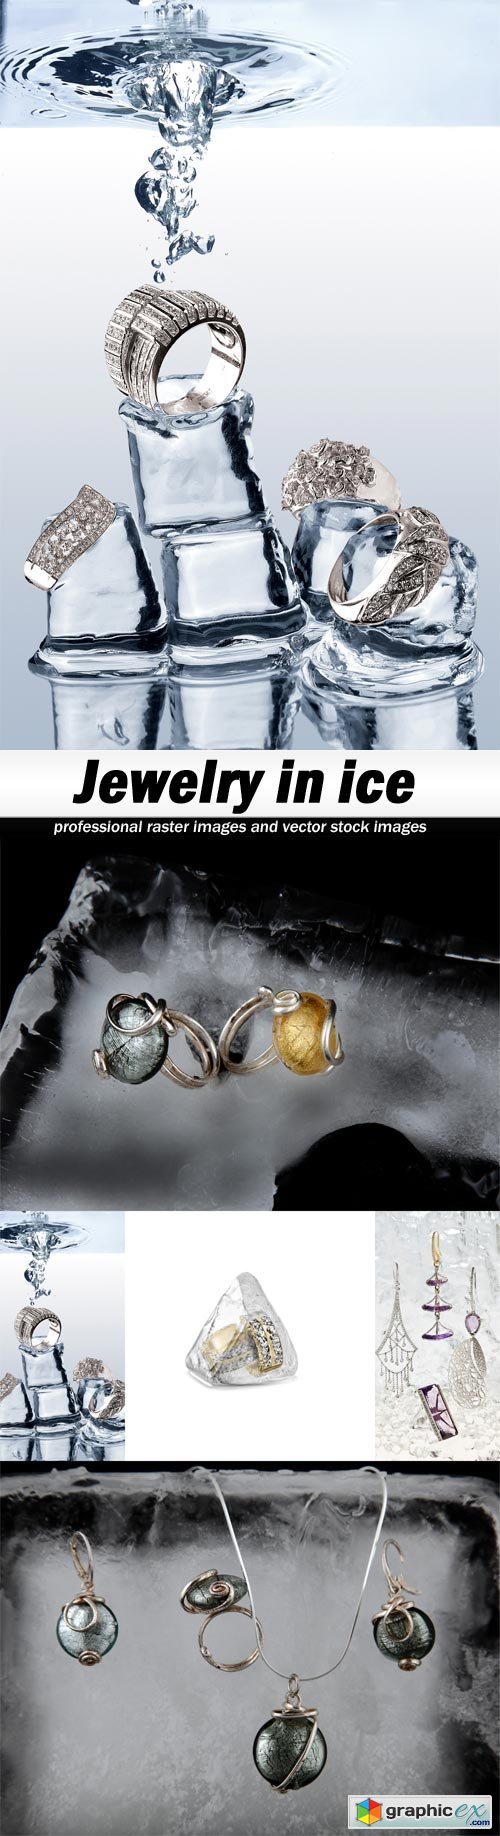 Jewelry in ice